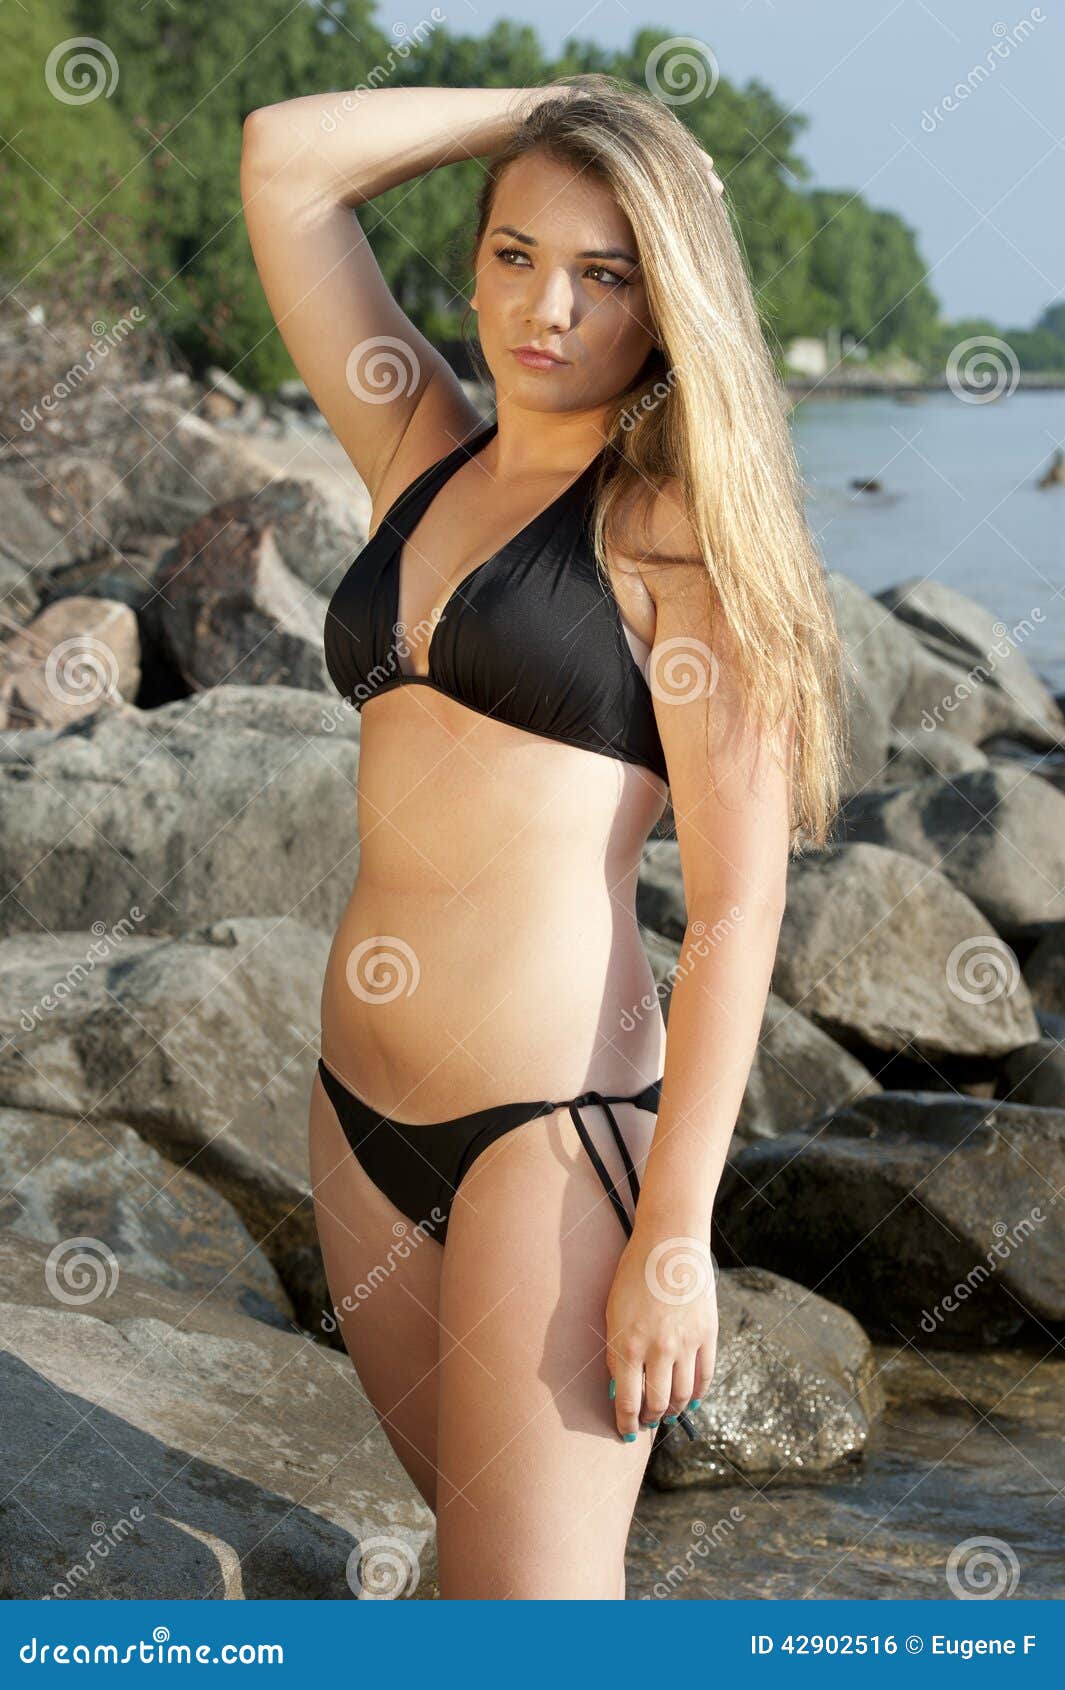 dusty armadillo homemade bikini contest Sex Pics Hd